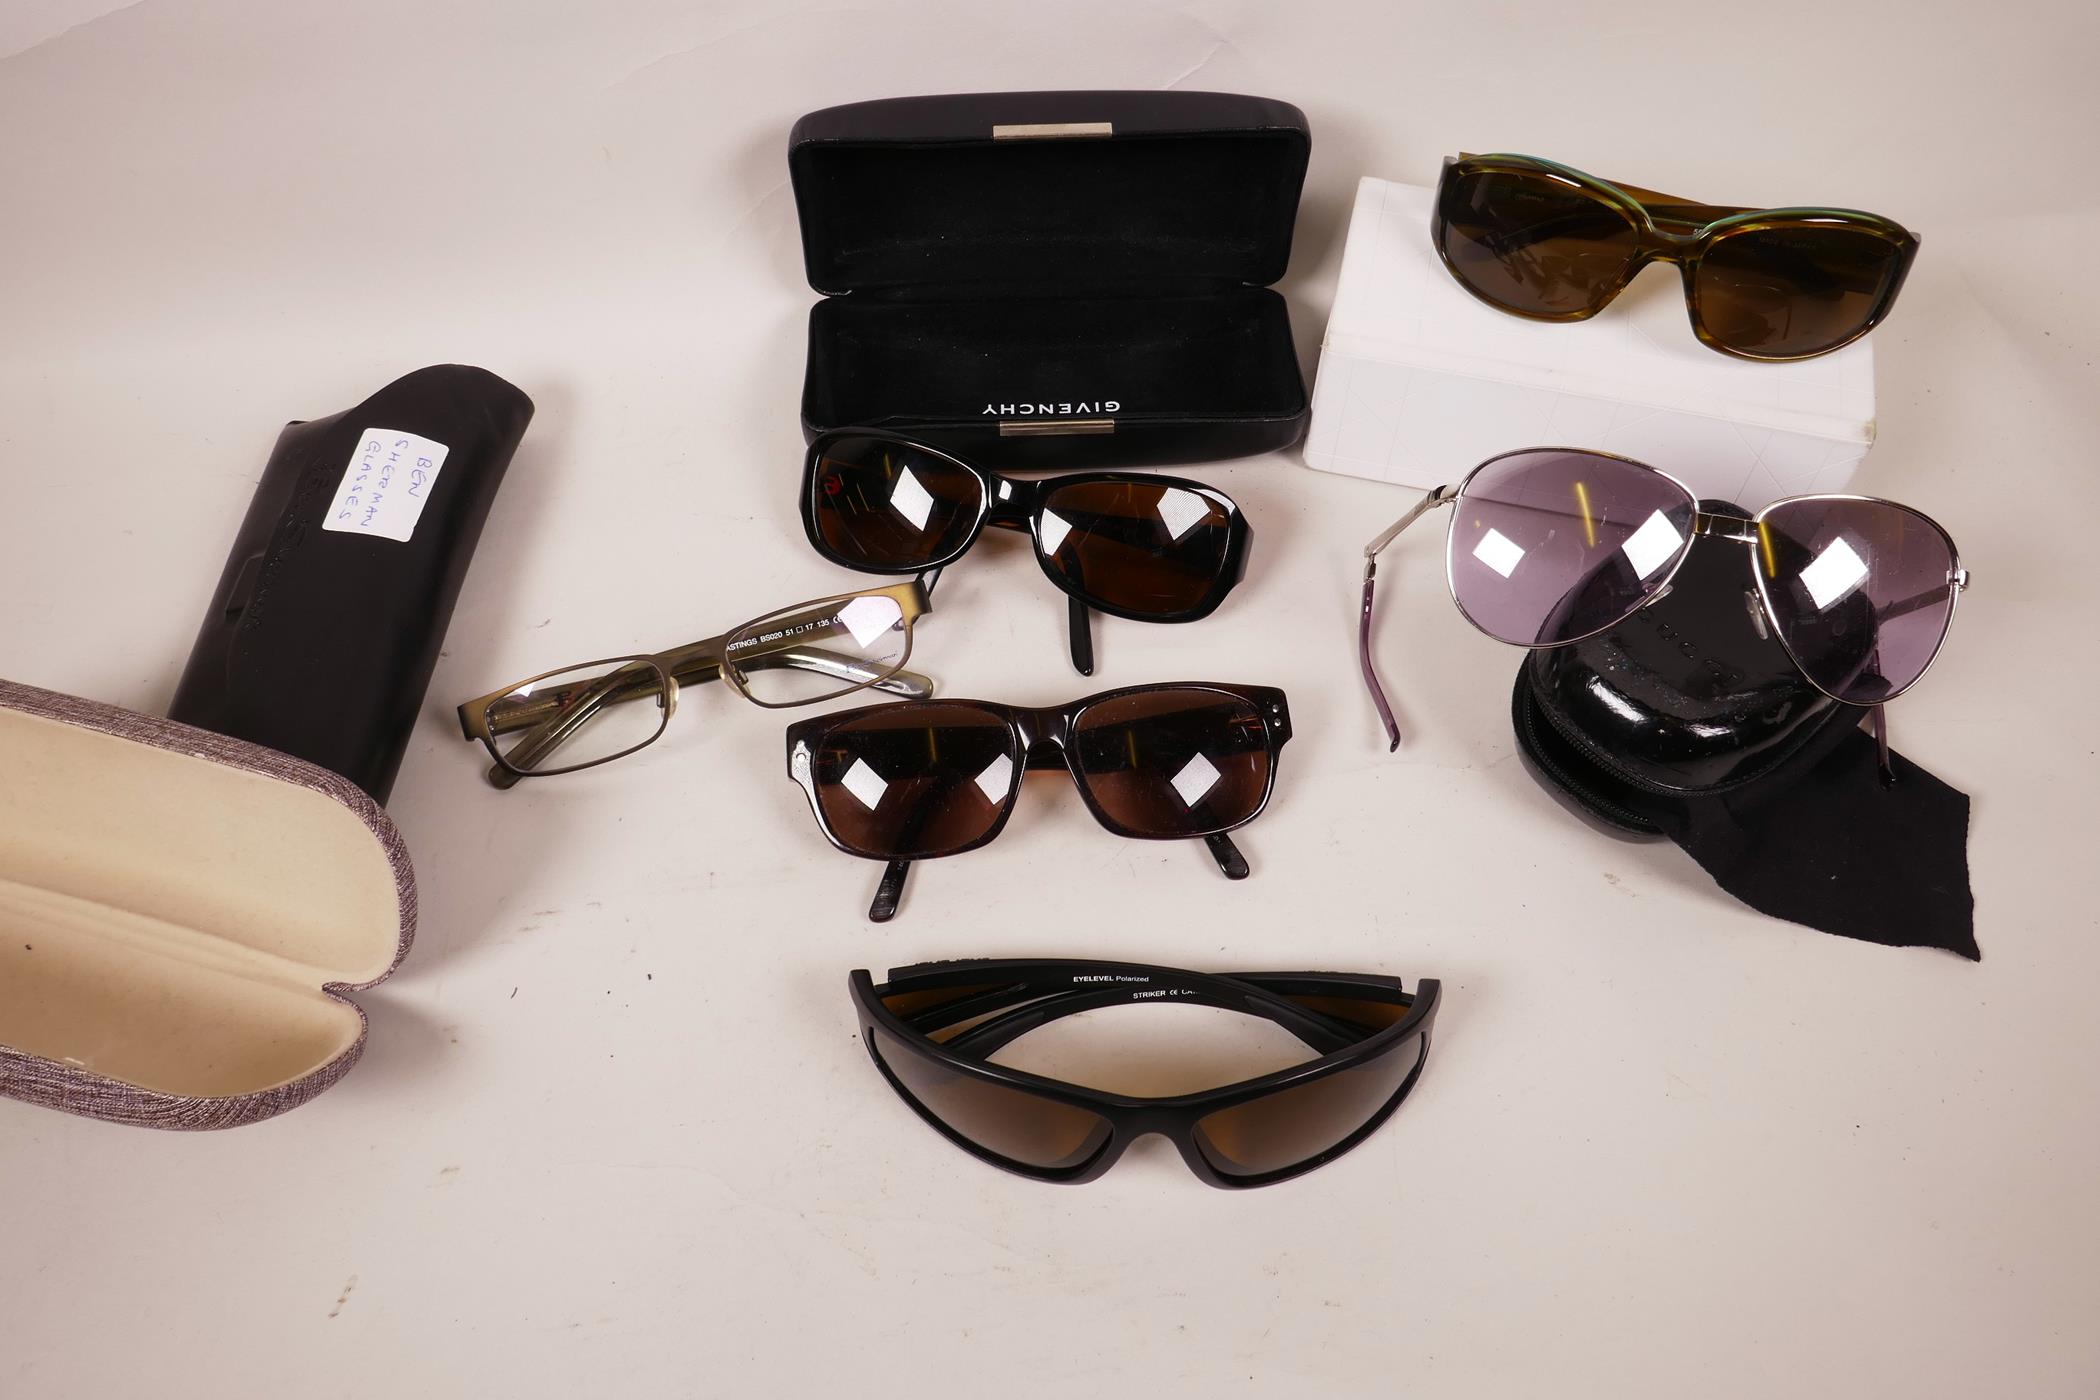 Six pairs of designer sunglasses including Jasper Conran, Ben Sherman etc